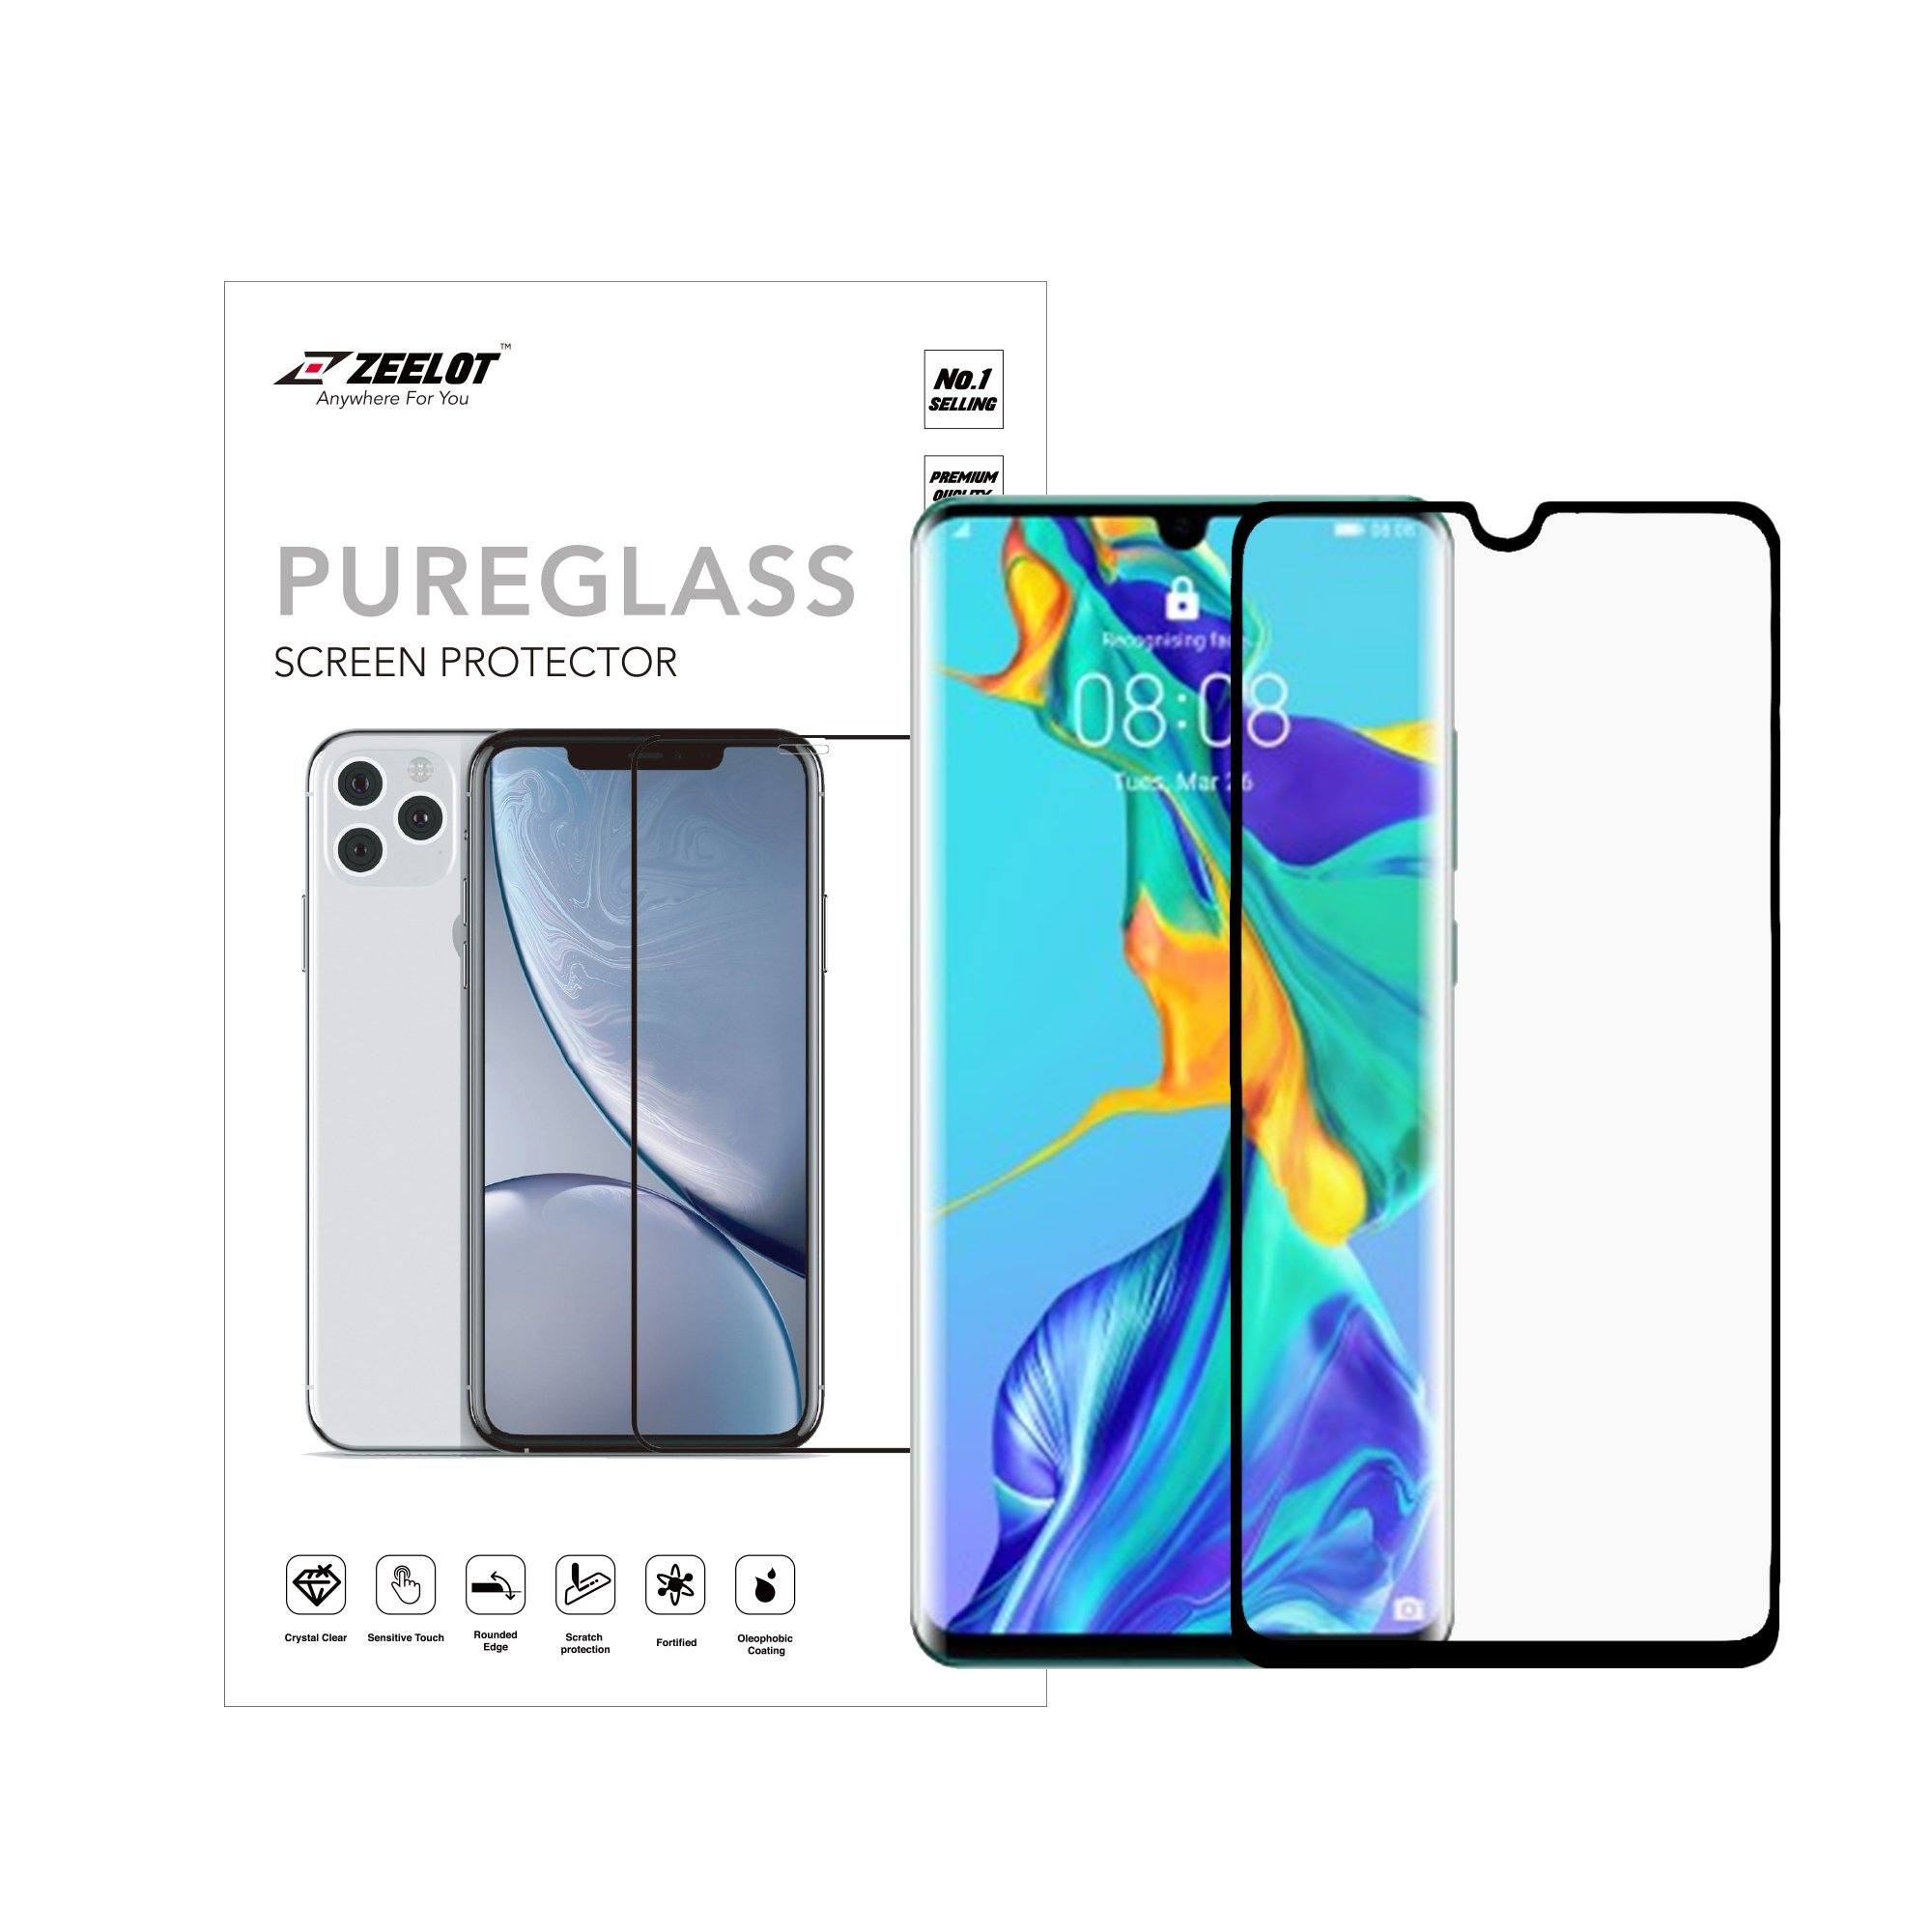 ZEELOT PureGlass 2.5D Clear Tempered Glass Screen Protector for Huawei Mate 20(2018) Tempered Glass Zeelot 